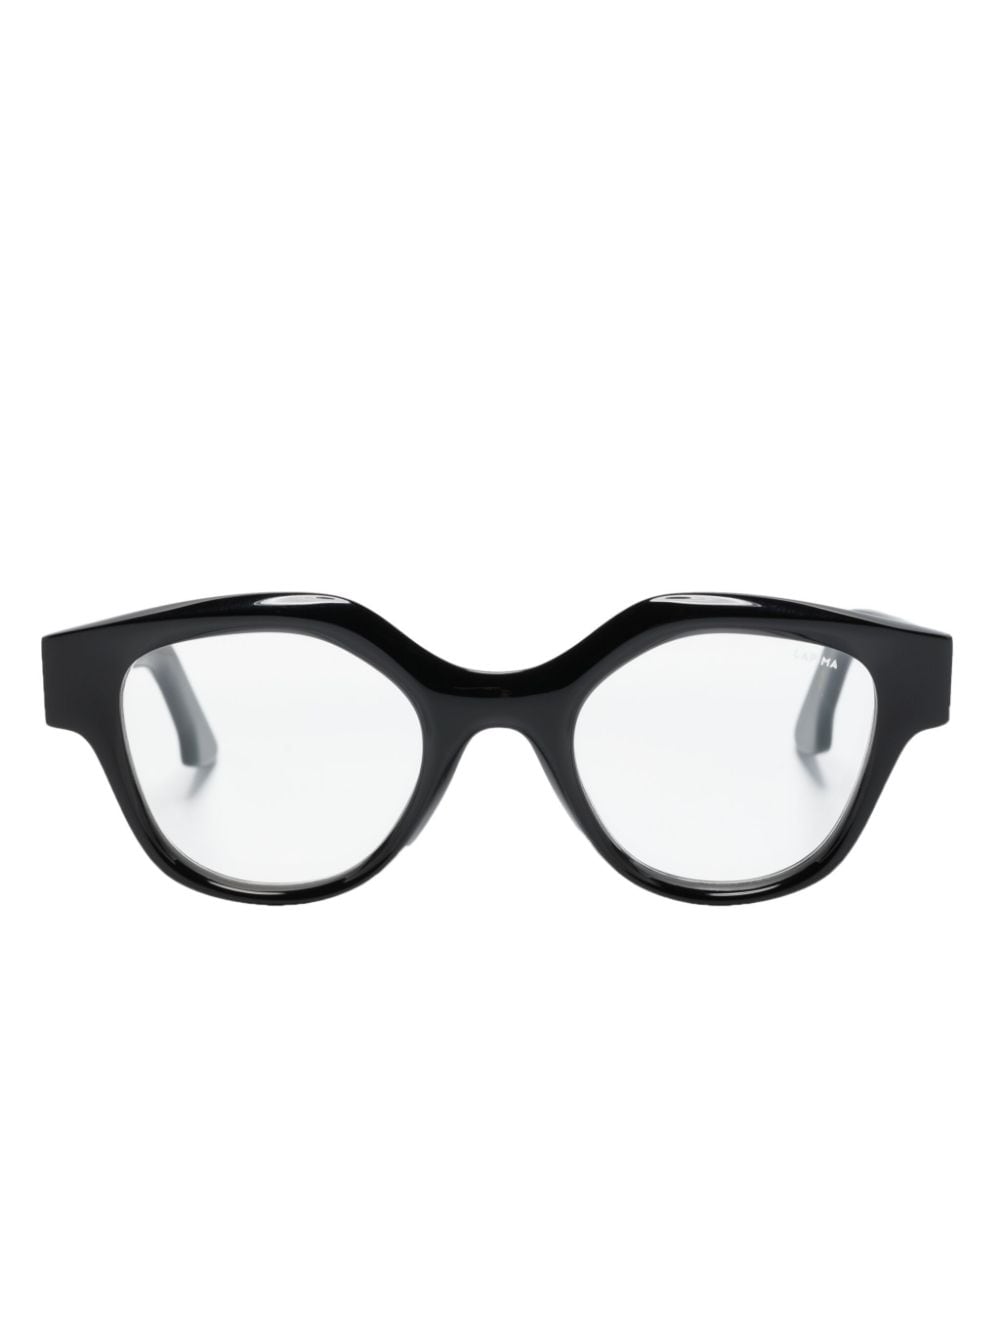 Lapima Vitoria oval-frame glasses - Black von Lapima